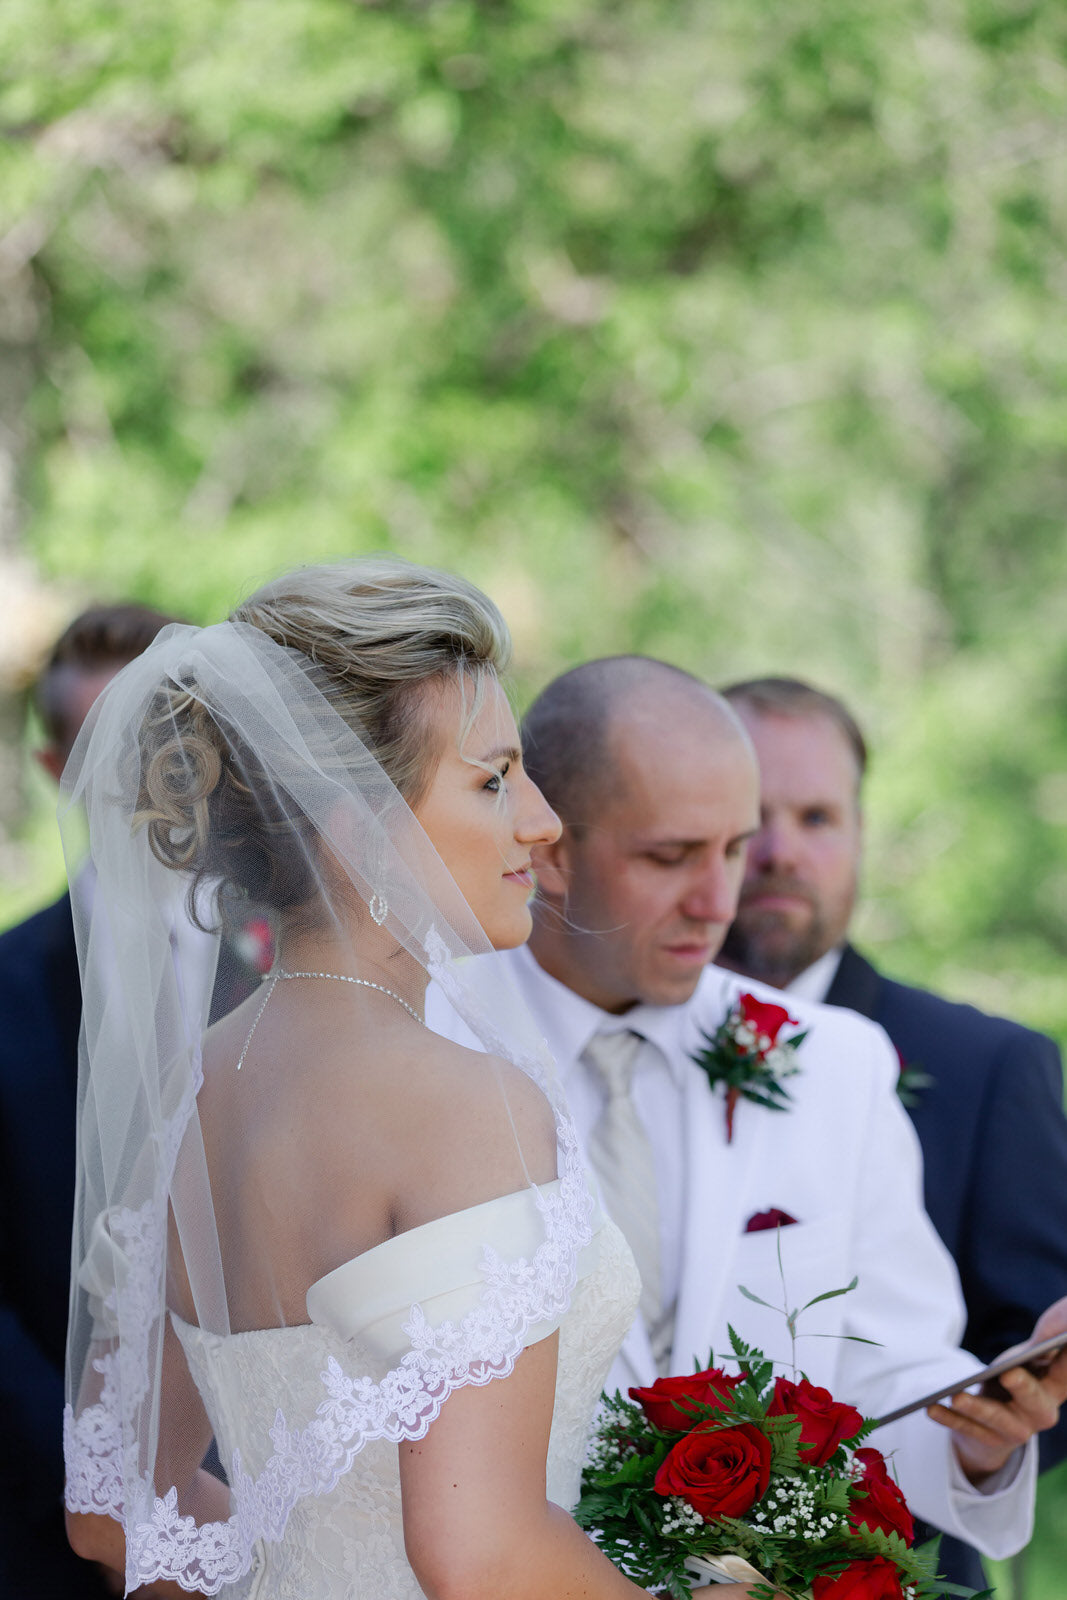 YouLaPan V49 Simple Wedding Veils and Tiara Bridal Veils Wedding Short  Elbow Length Lace Wedding Veil with Partial Trim